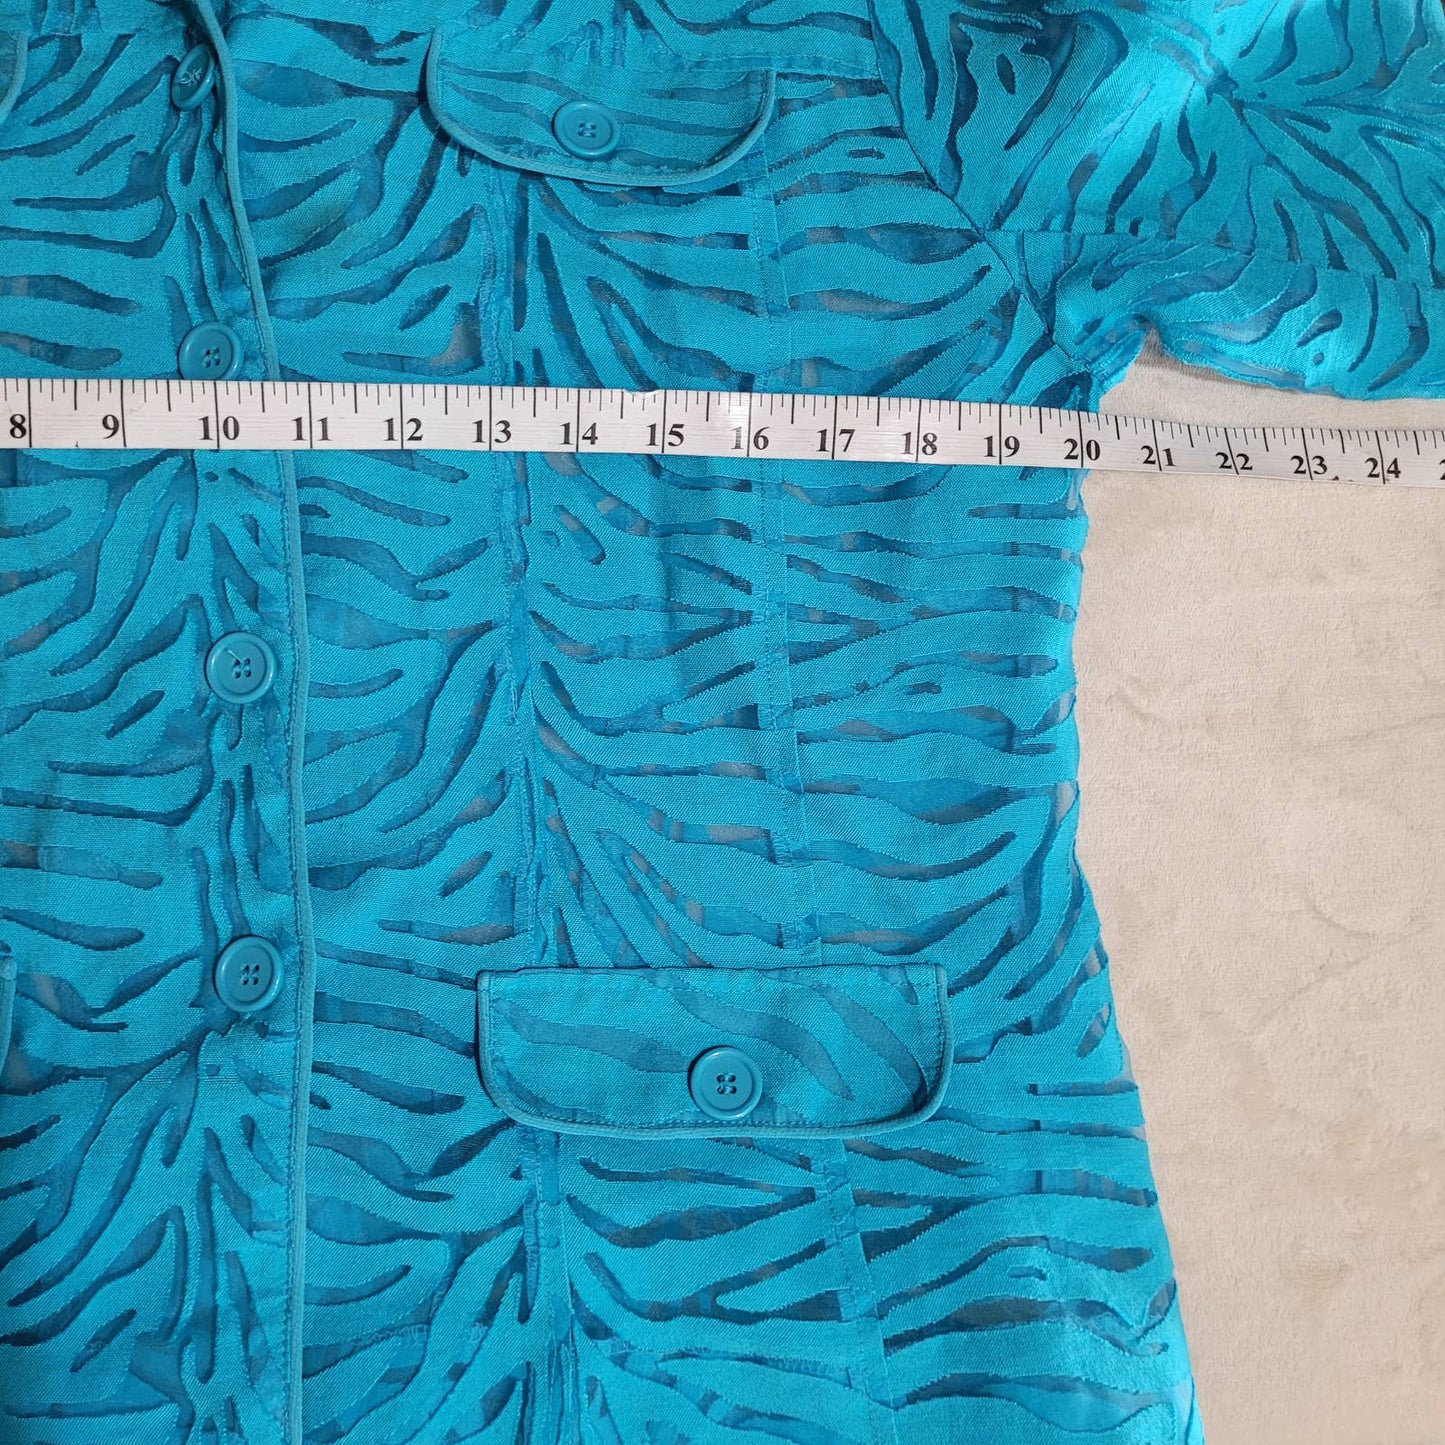 Clara S Blue Zebra Print Blazer Jacket Sheer Button Up - Size Large